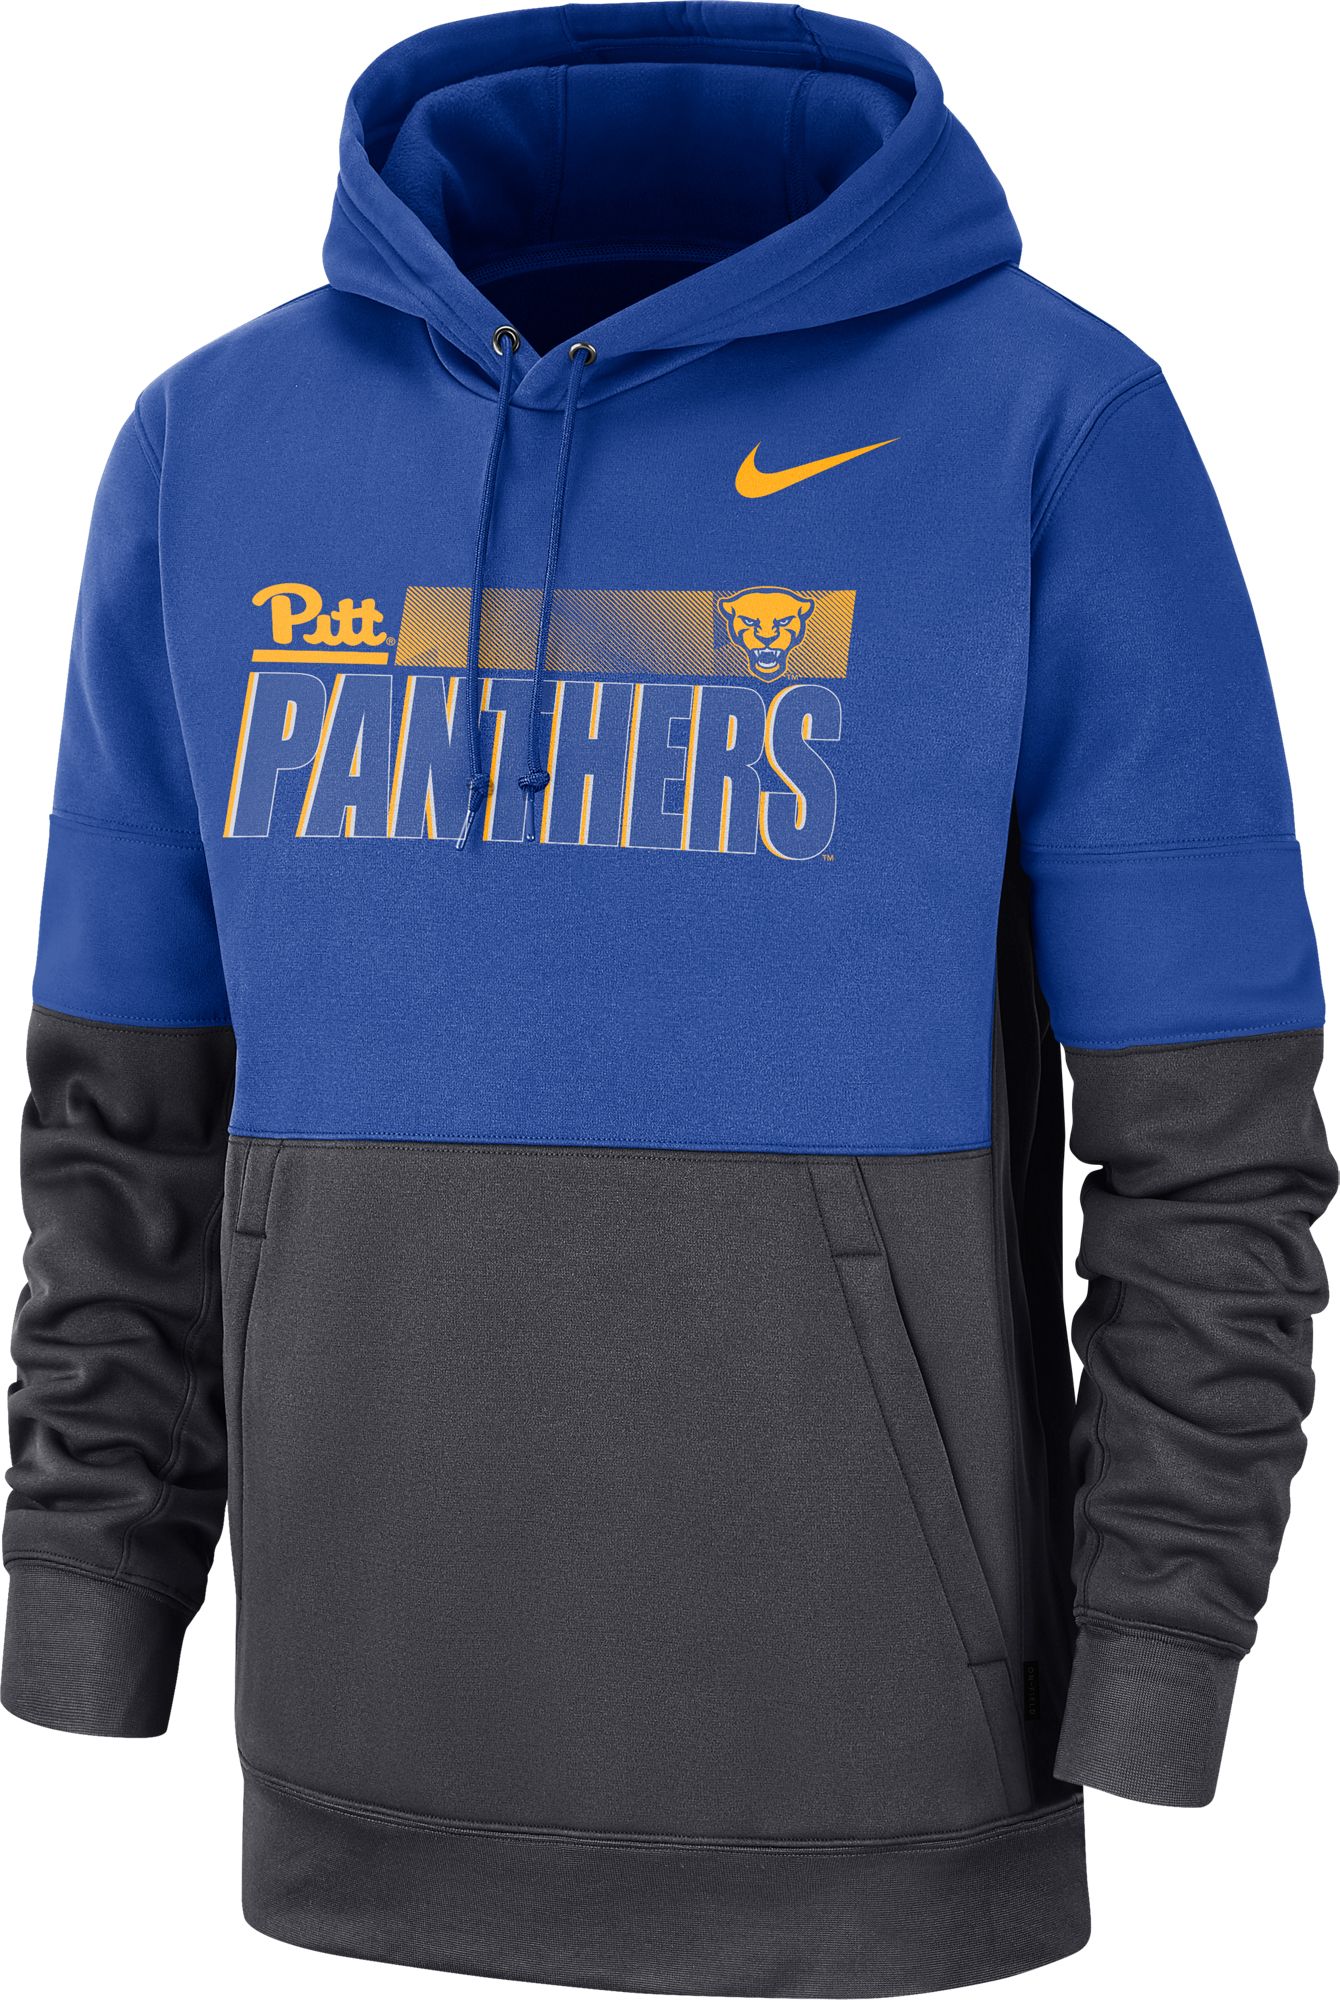 Nike Pitt Panthers Apparel | Best Price 